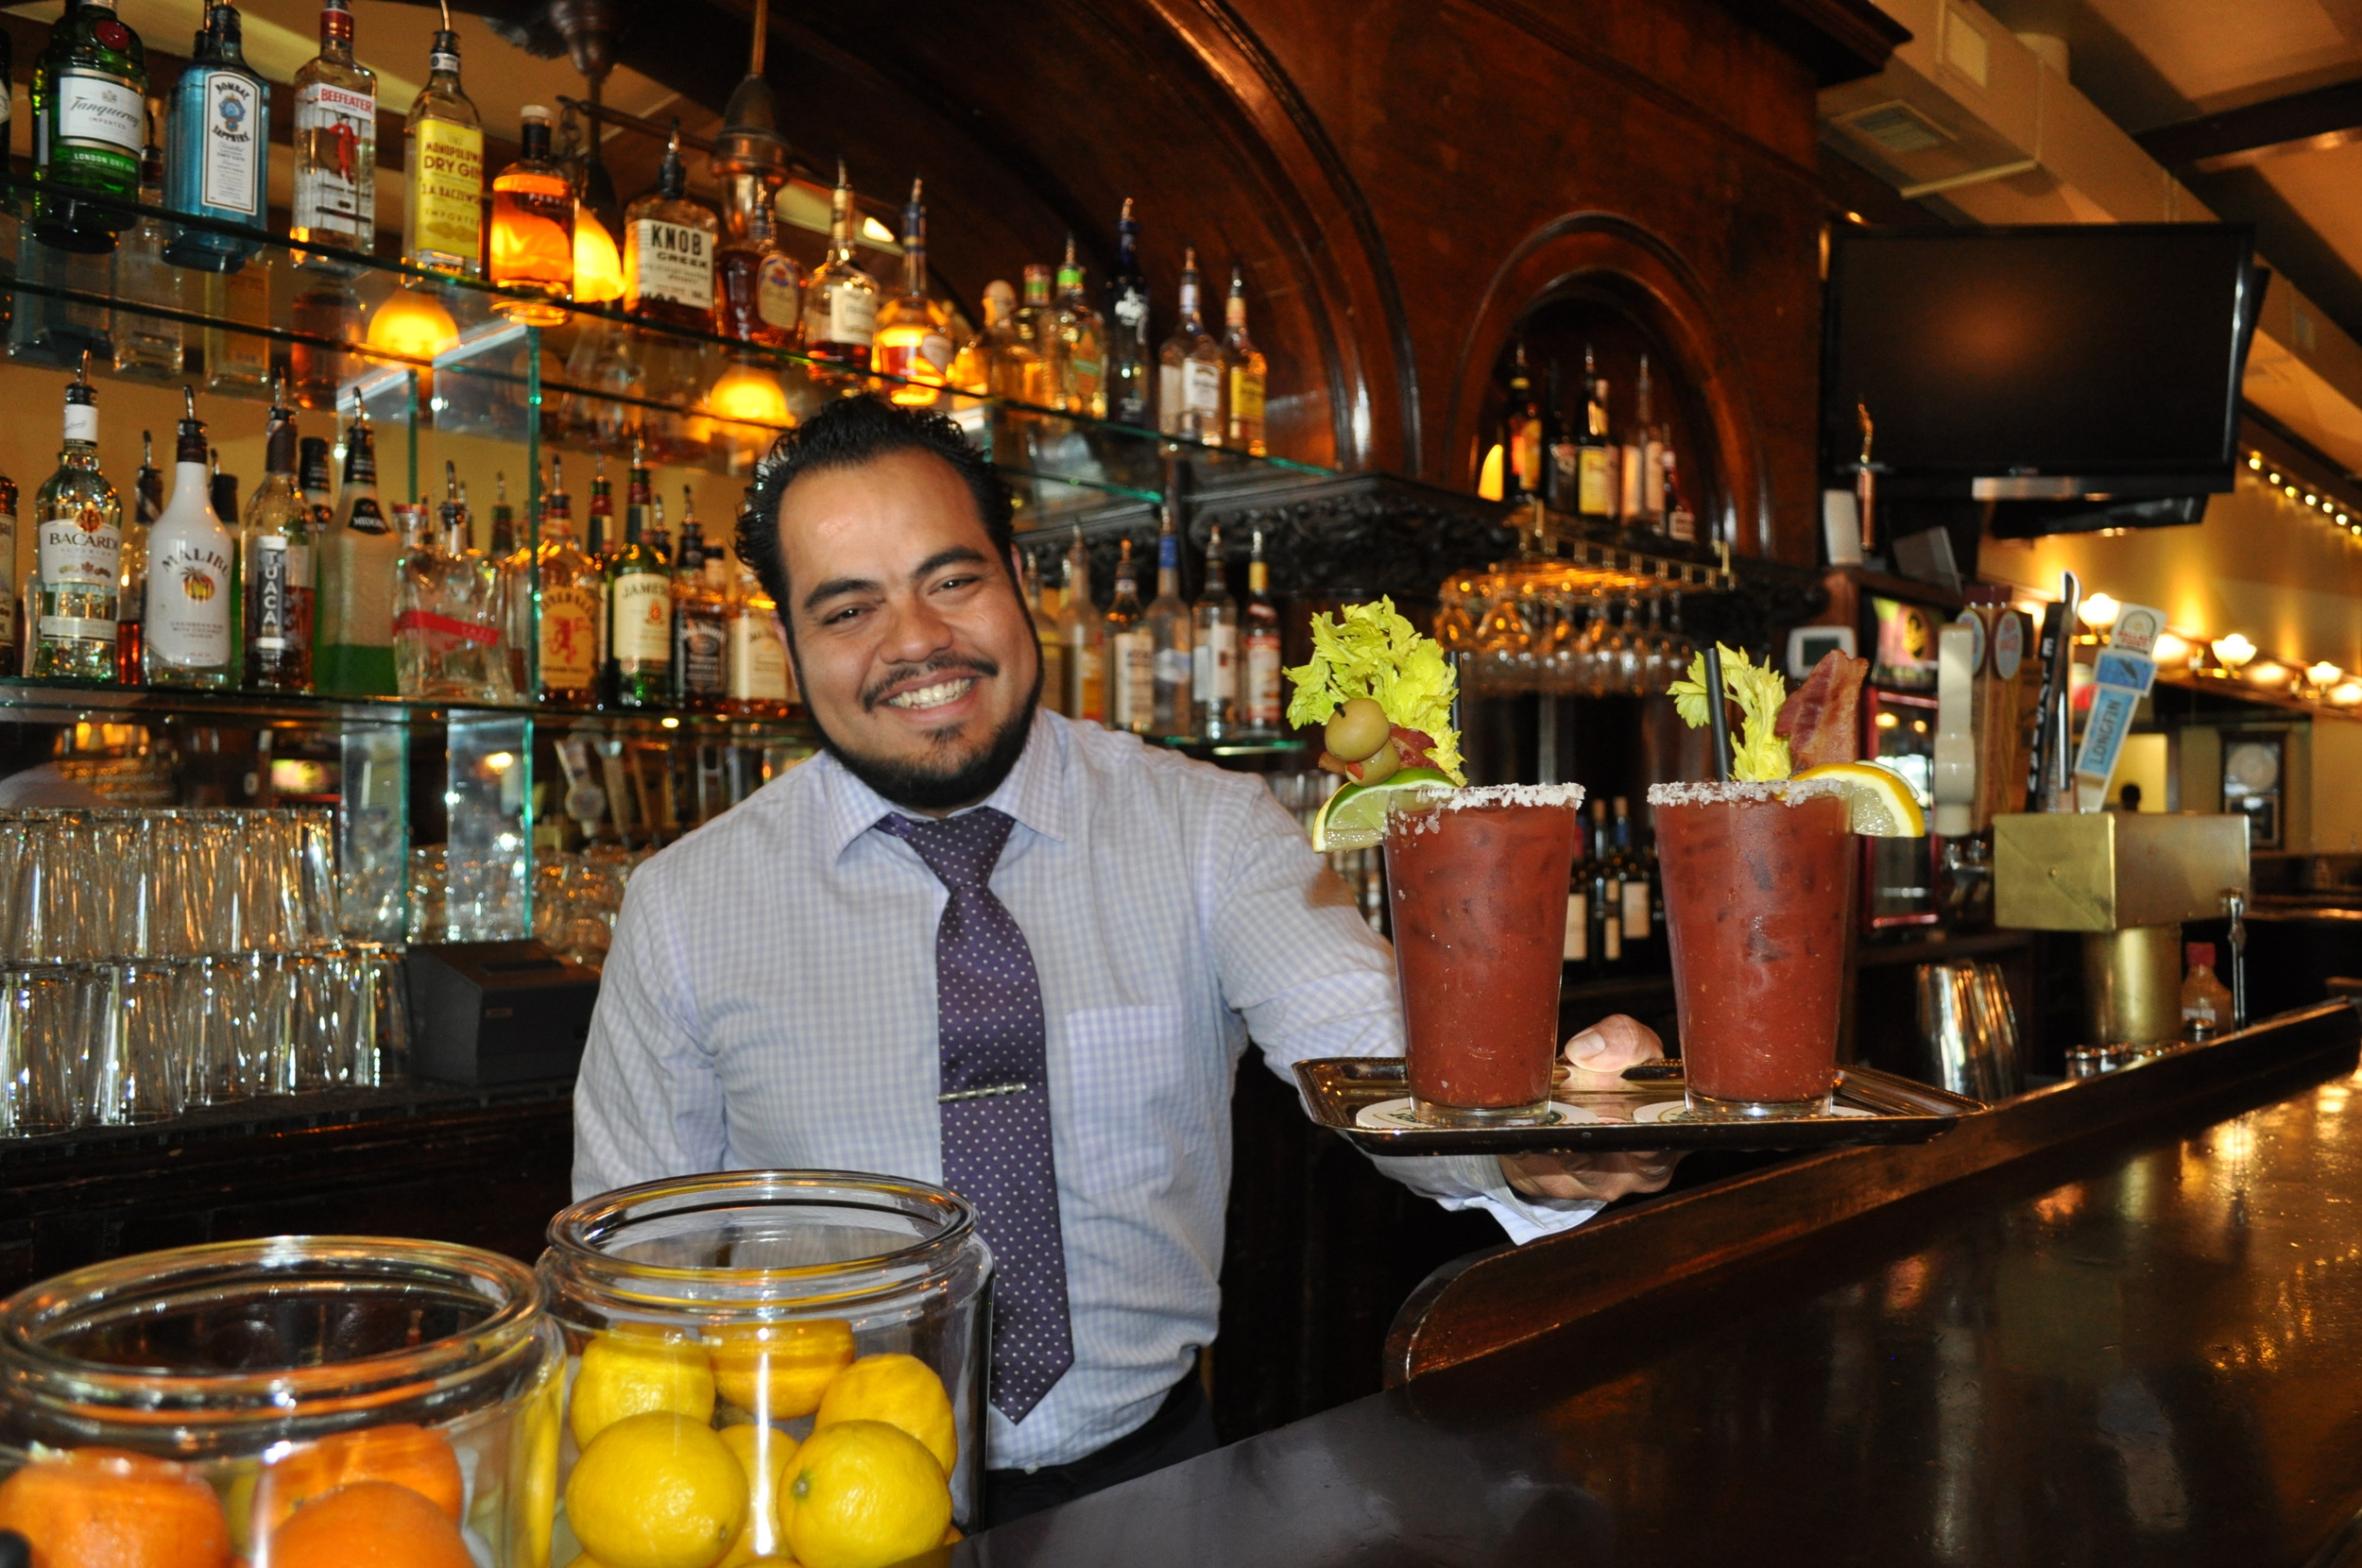 louies-of-ashland-friendly-bartender.JPG